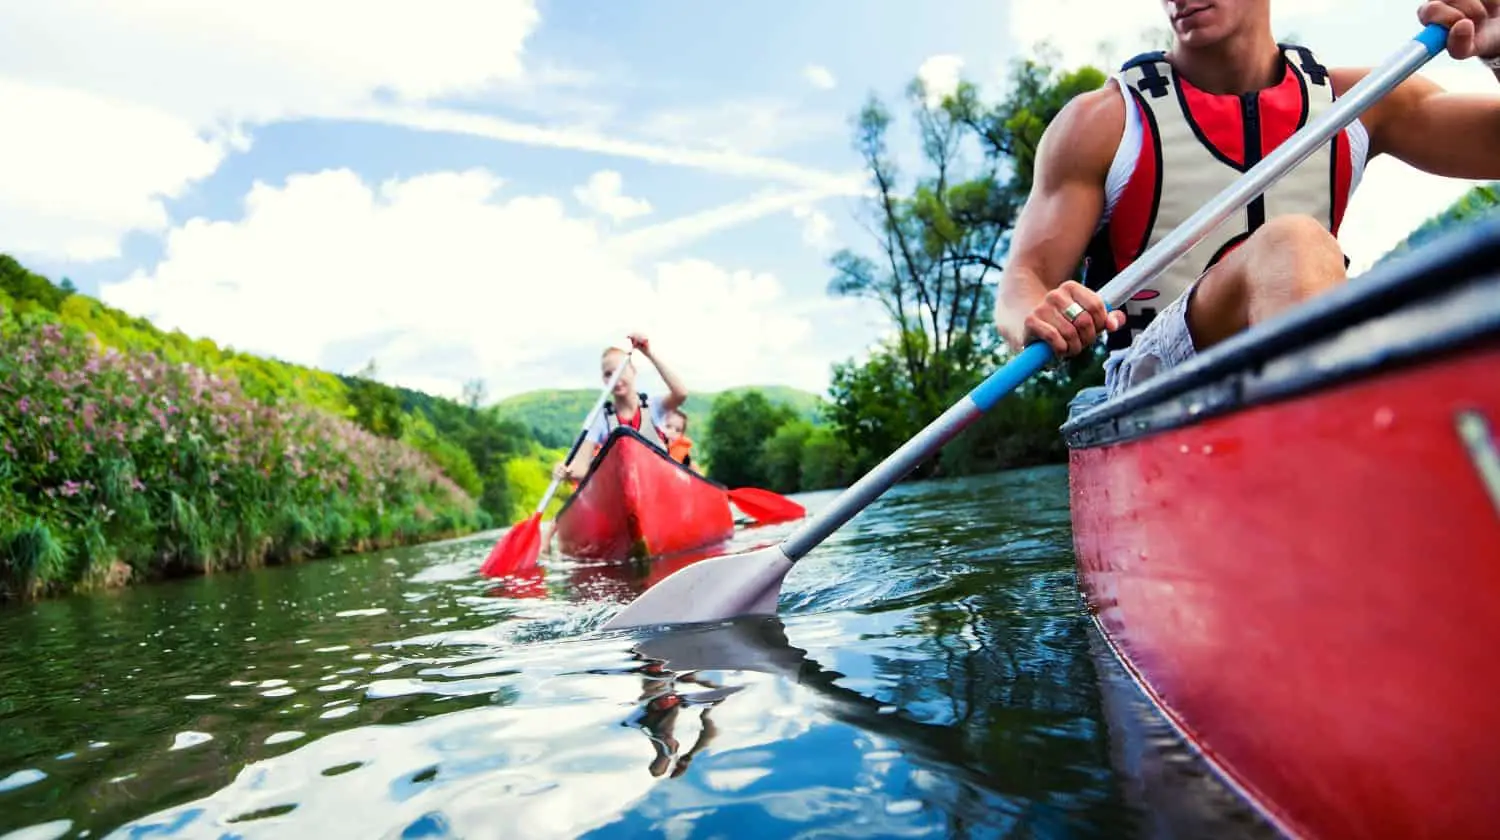 kayaking | Feature | New Technology Gadgets You Need For Summer | cool tech gadgets | new tech gadgets